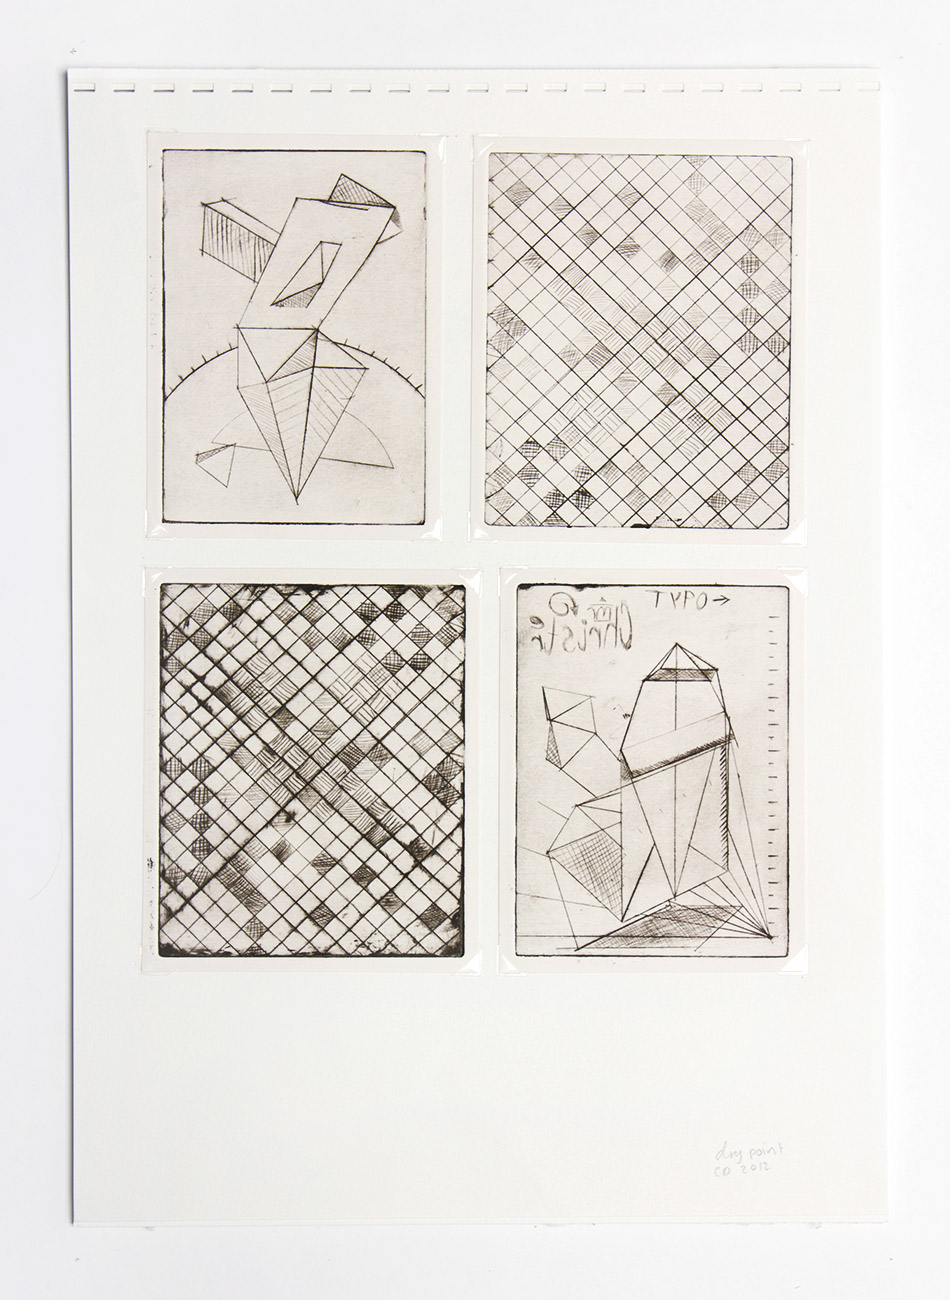 rodchenko Christer Dahlslett solent constructivism grid systematic Tate modern moderism Tatlin stepanova malevich russian